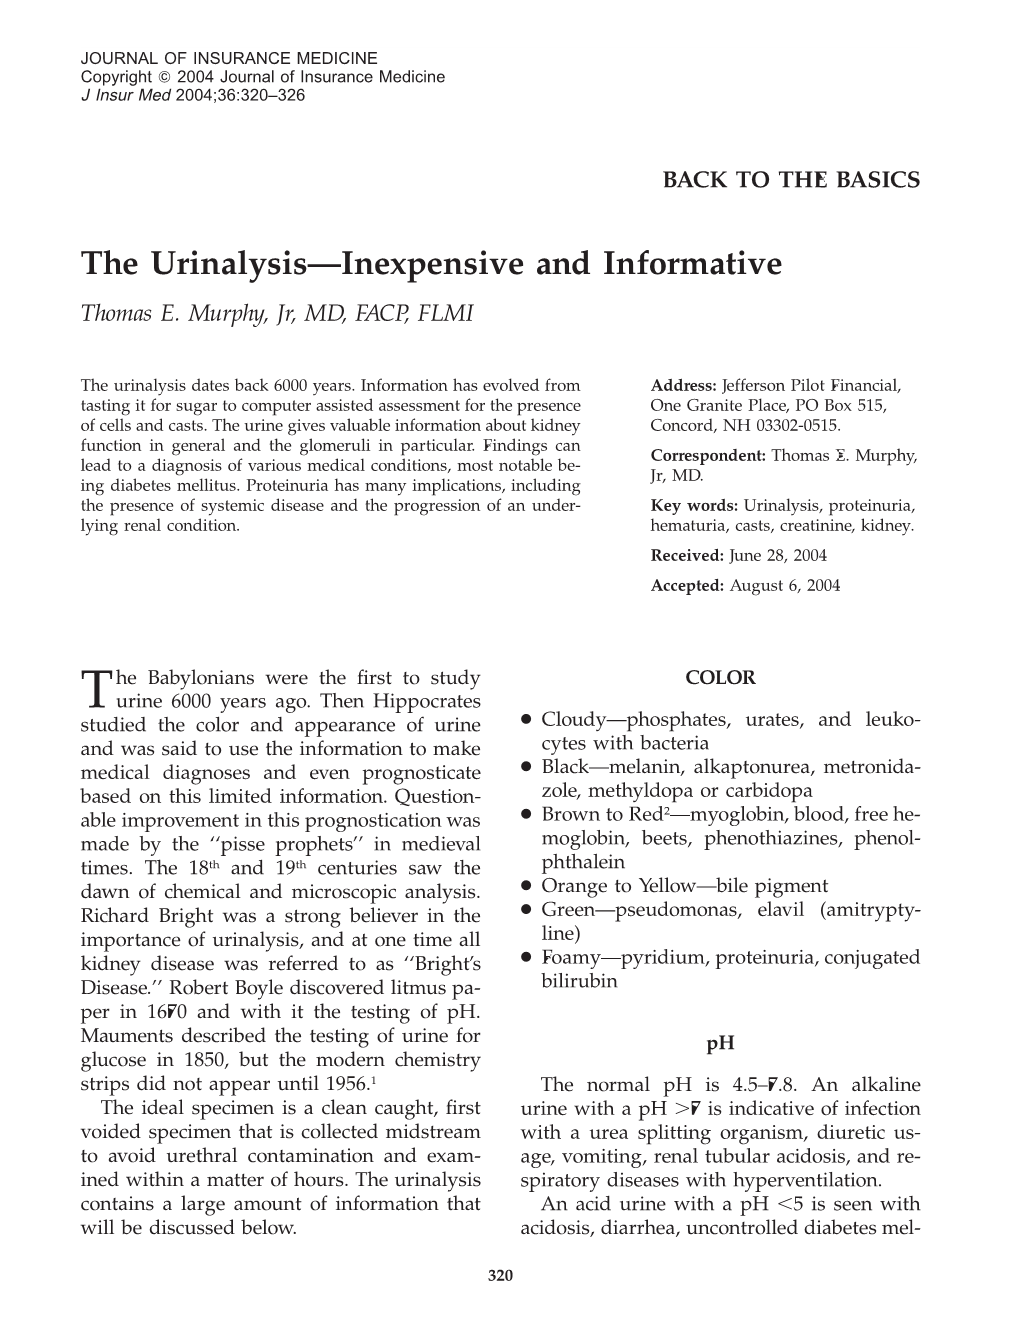 The Urinalysis—Inexpensive and Informative Thomas E